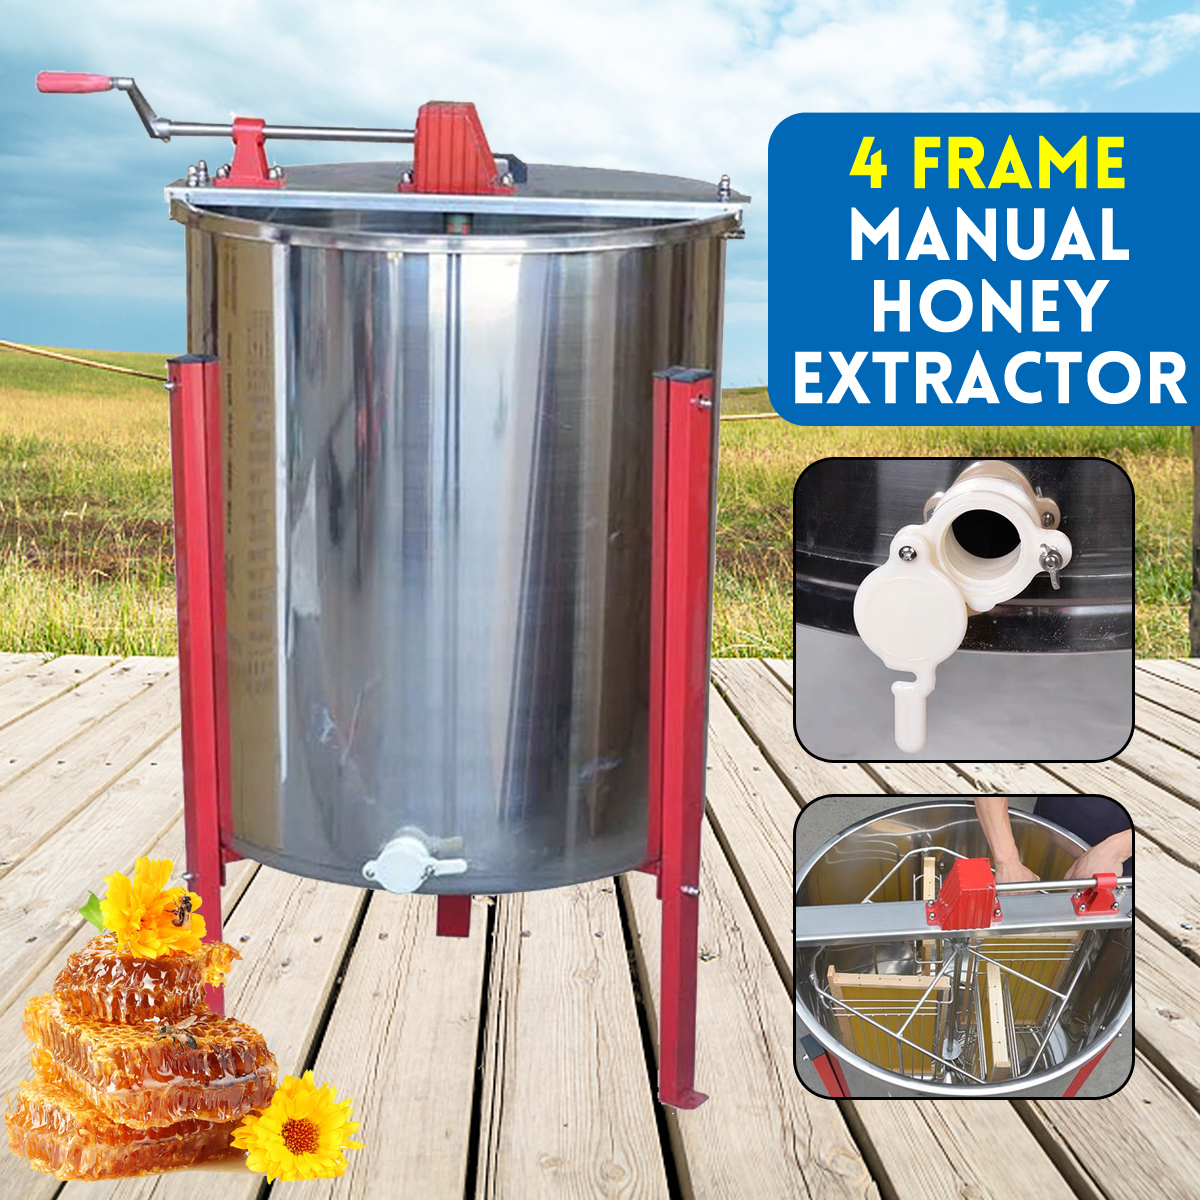 Honey-Extractor-4-Frame-Stainless-Steel-Manual-Bee-Beekeeping-Equipment-Tool-1755389